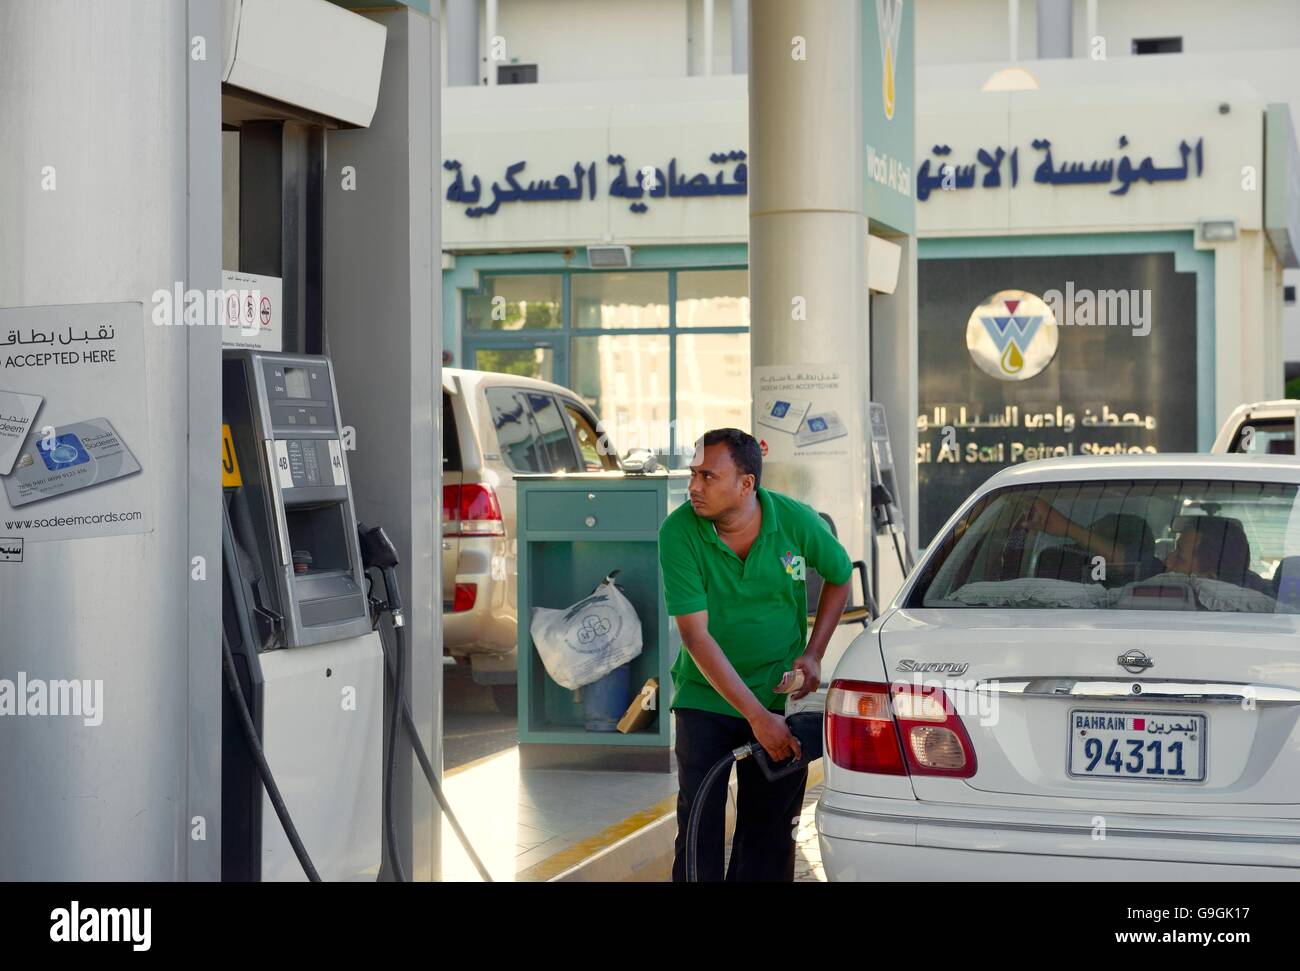 Wadi Al Sail Petrol Station, Riffa, Bahrain. Man filling car from fuel pump on service court Stock Photo